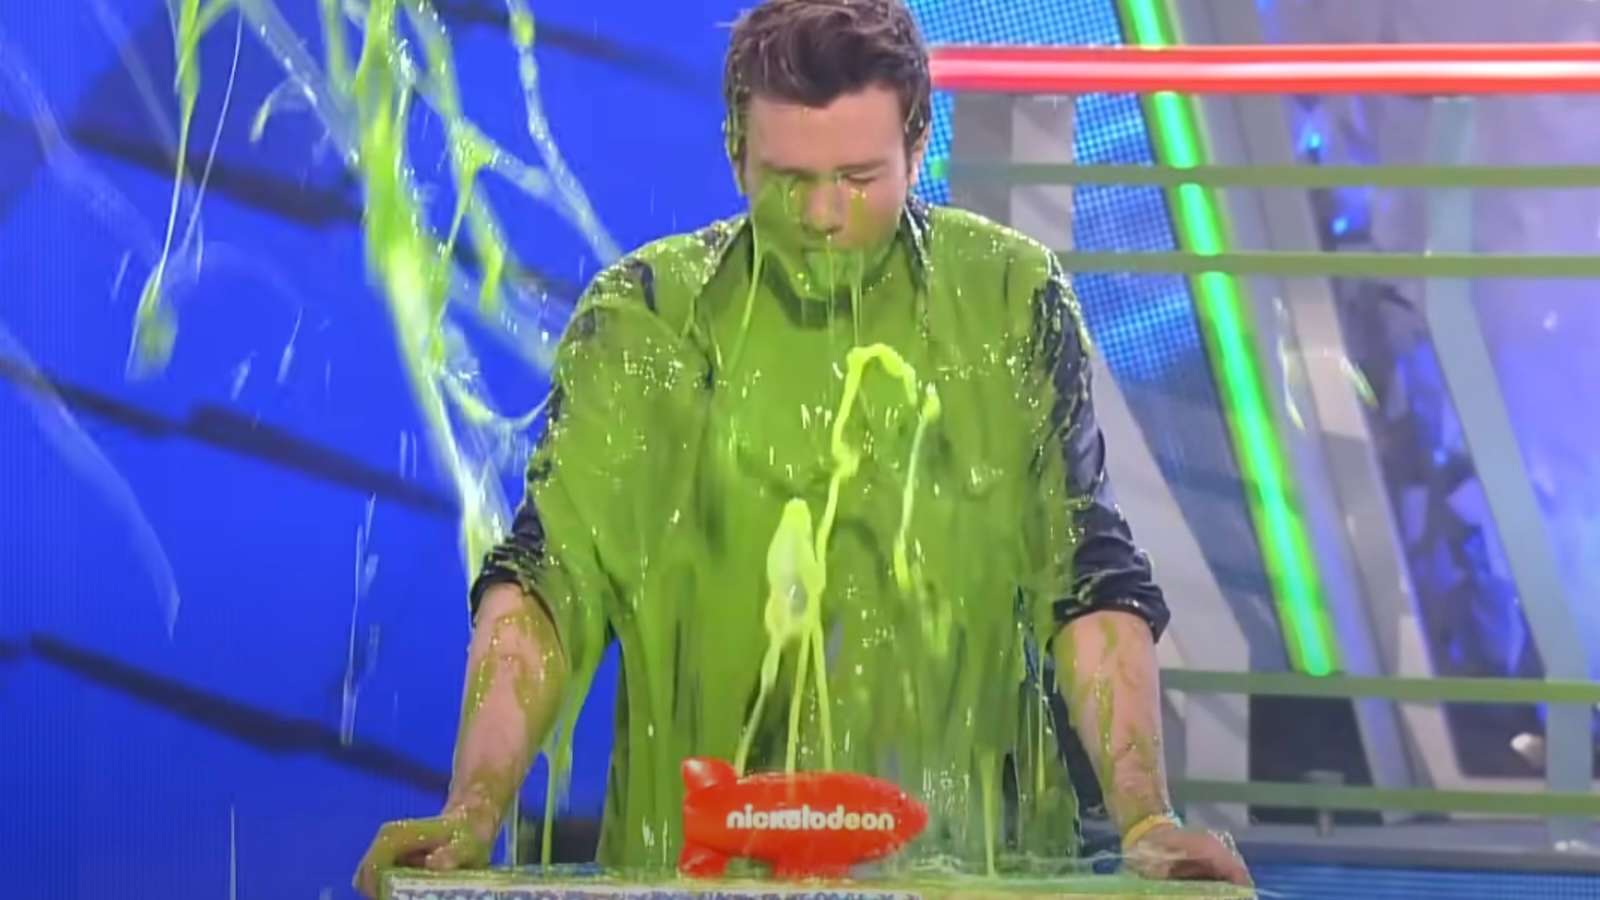 Nickelodeon slime scene shown in Quiet on Set: The Dark Side of Kids TV